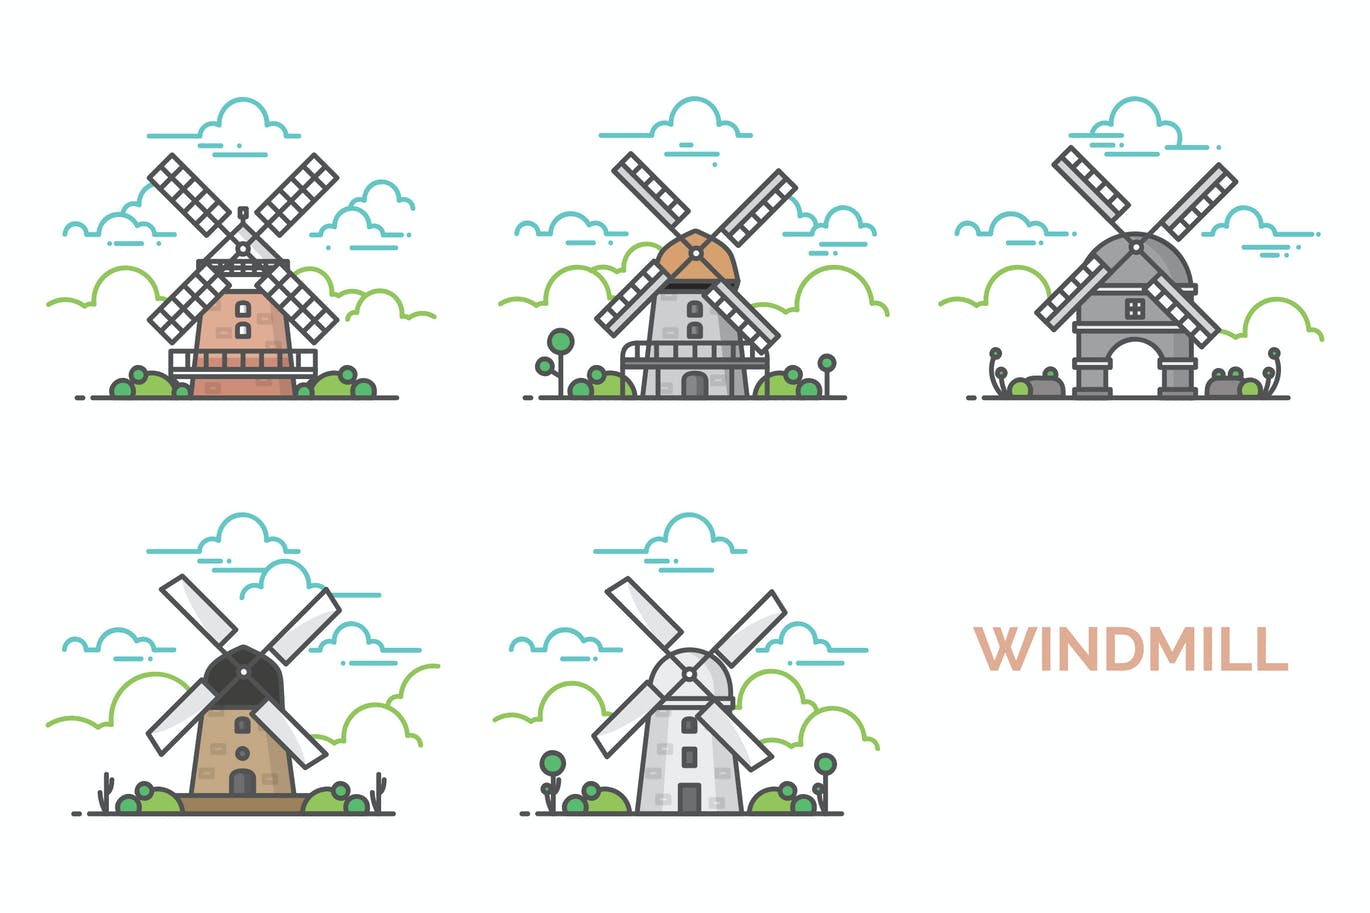 A windmill icon set